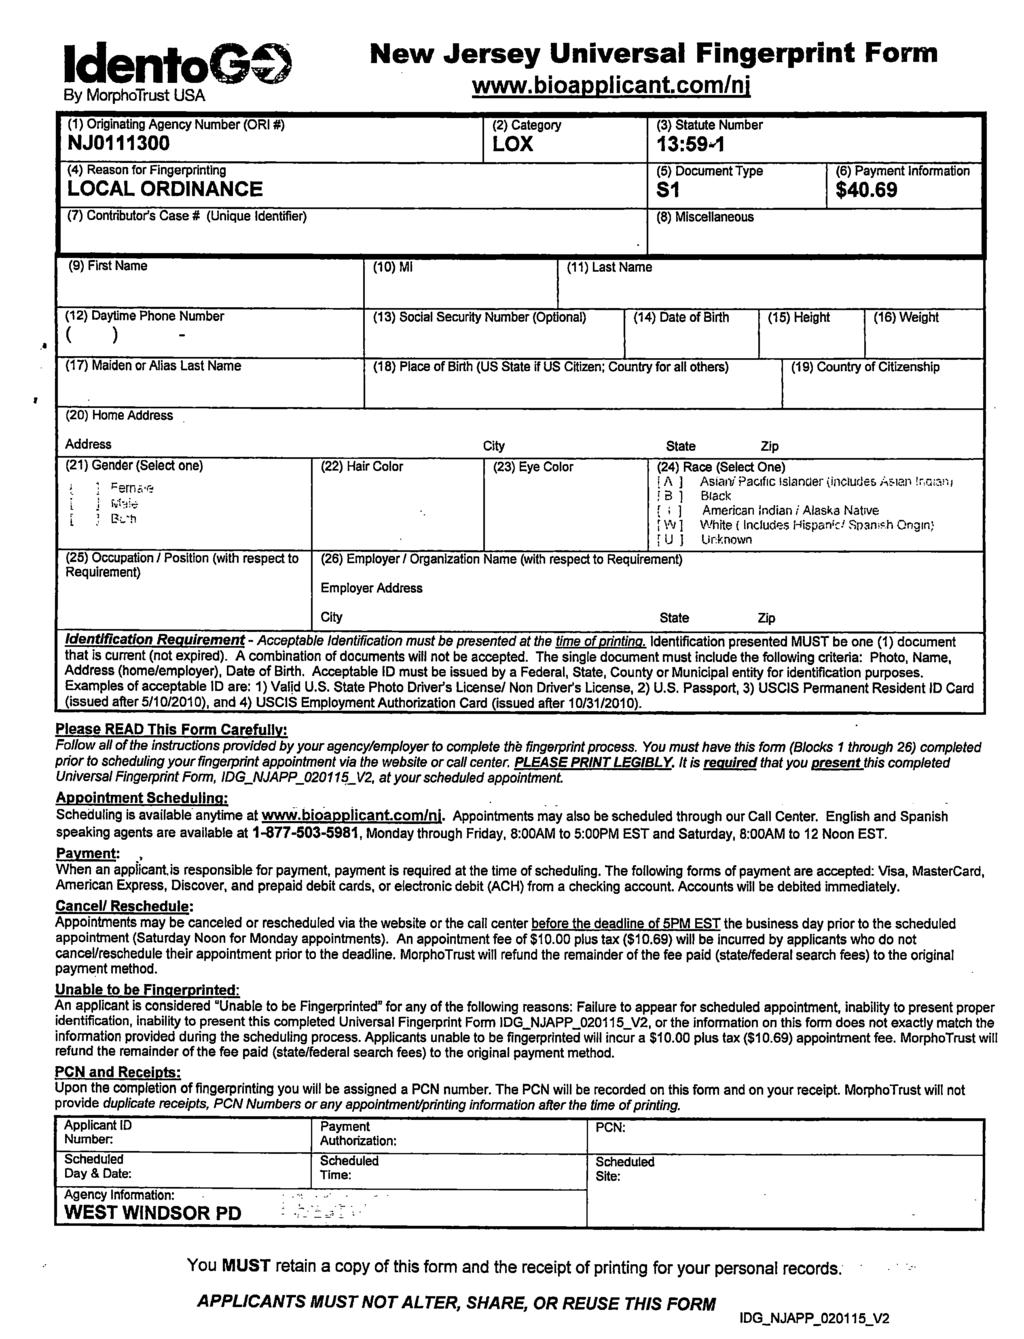 IdentoGO By Morph Trust USA New Jersey Universal Fingerprint Form WWW bloapplicant.